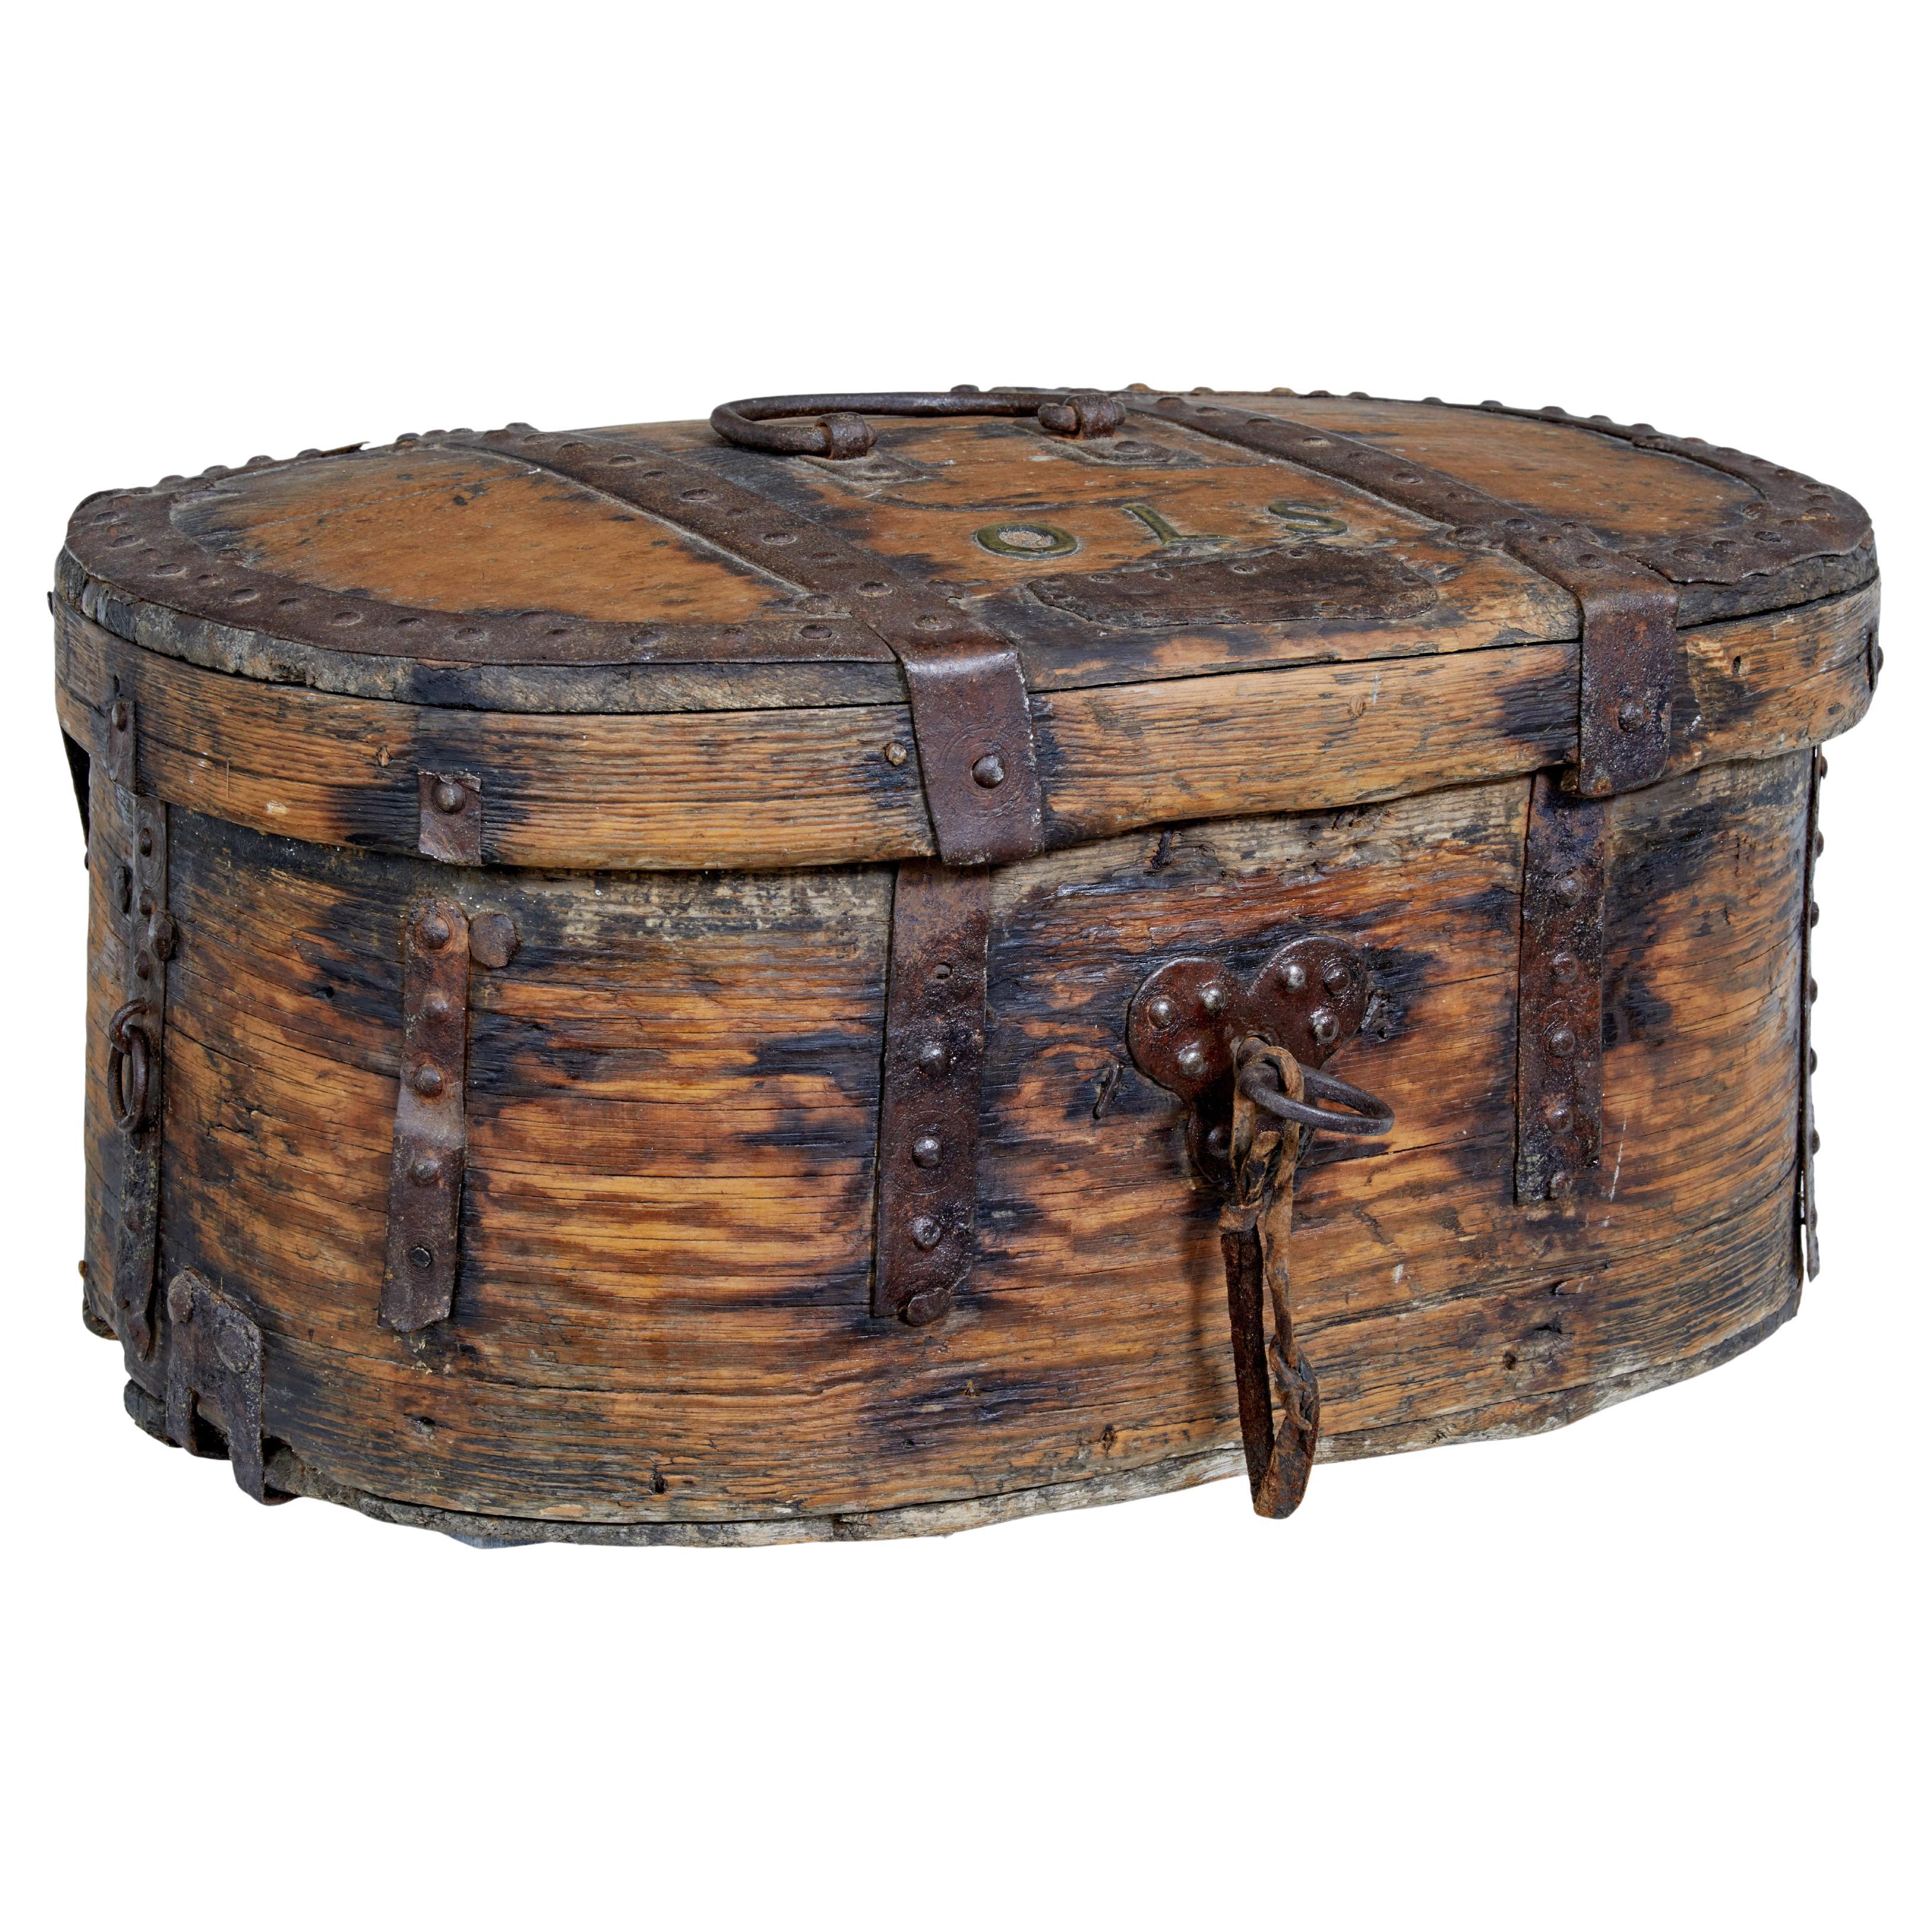 Early 18th century Scandinavian baroque oak iron bound box